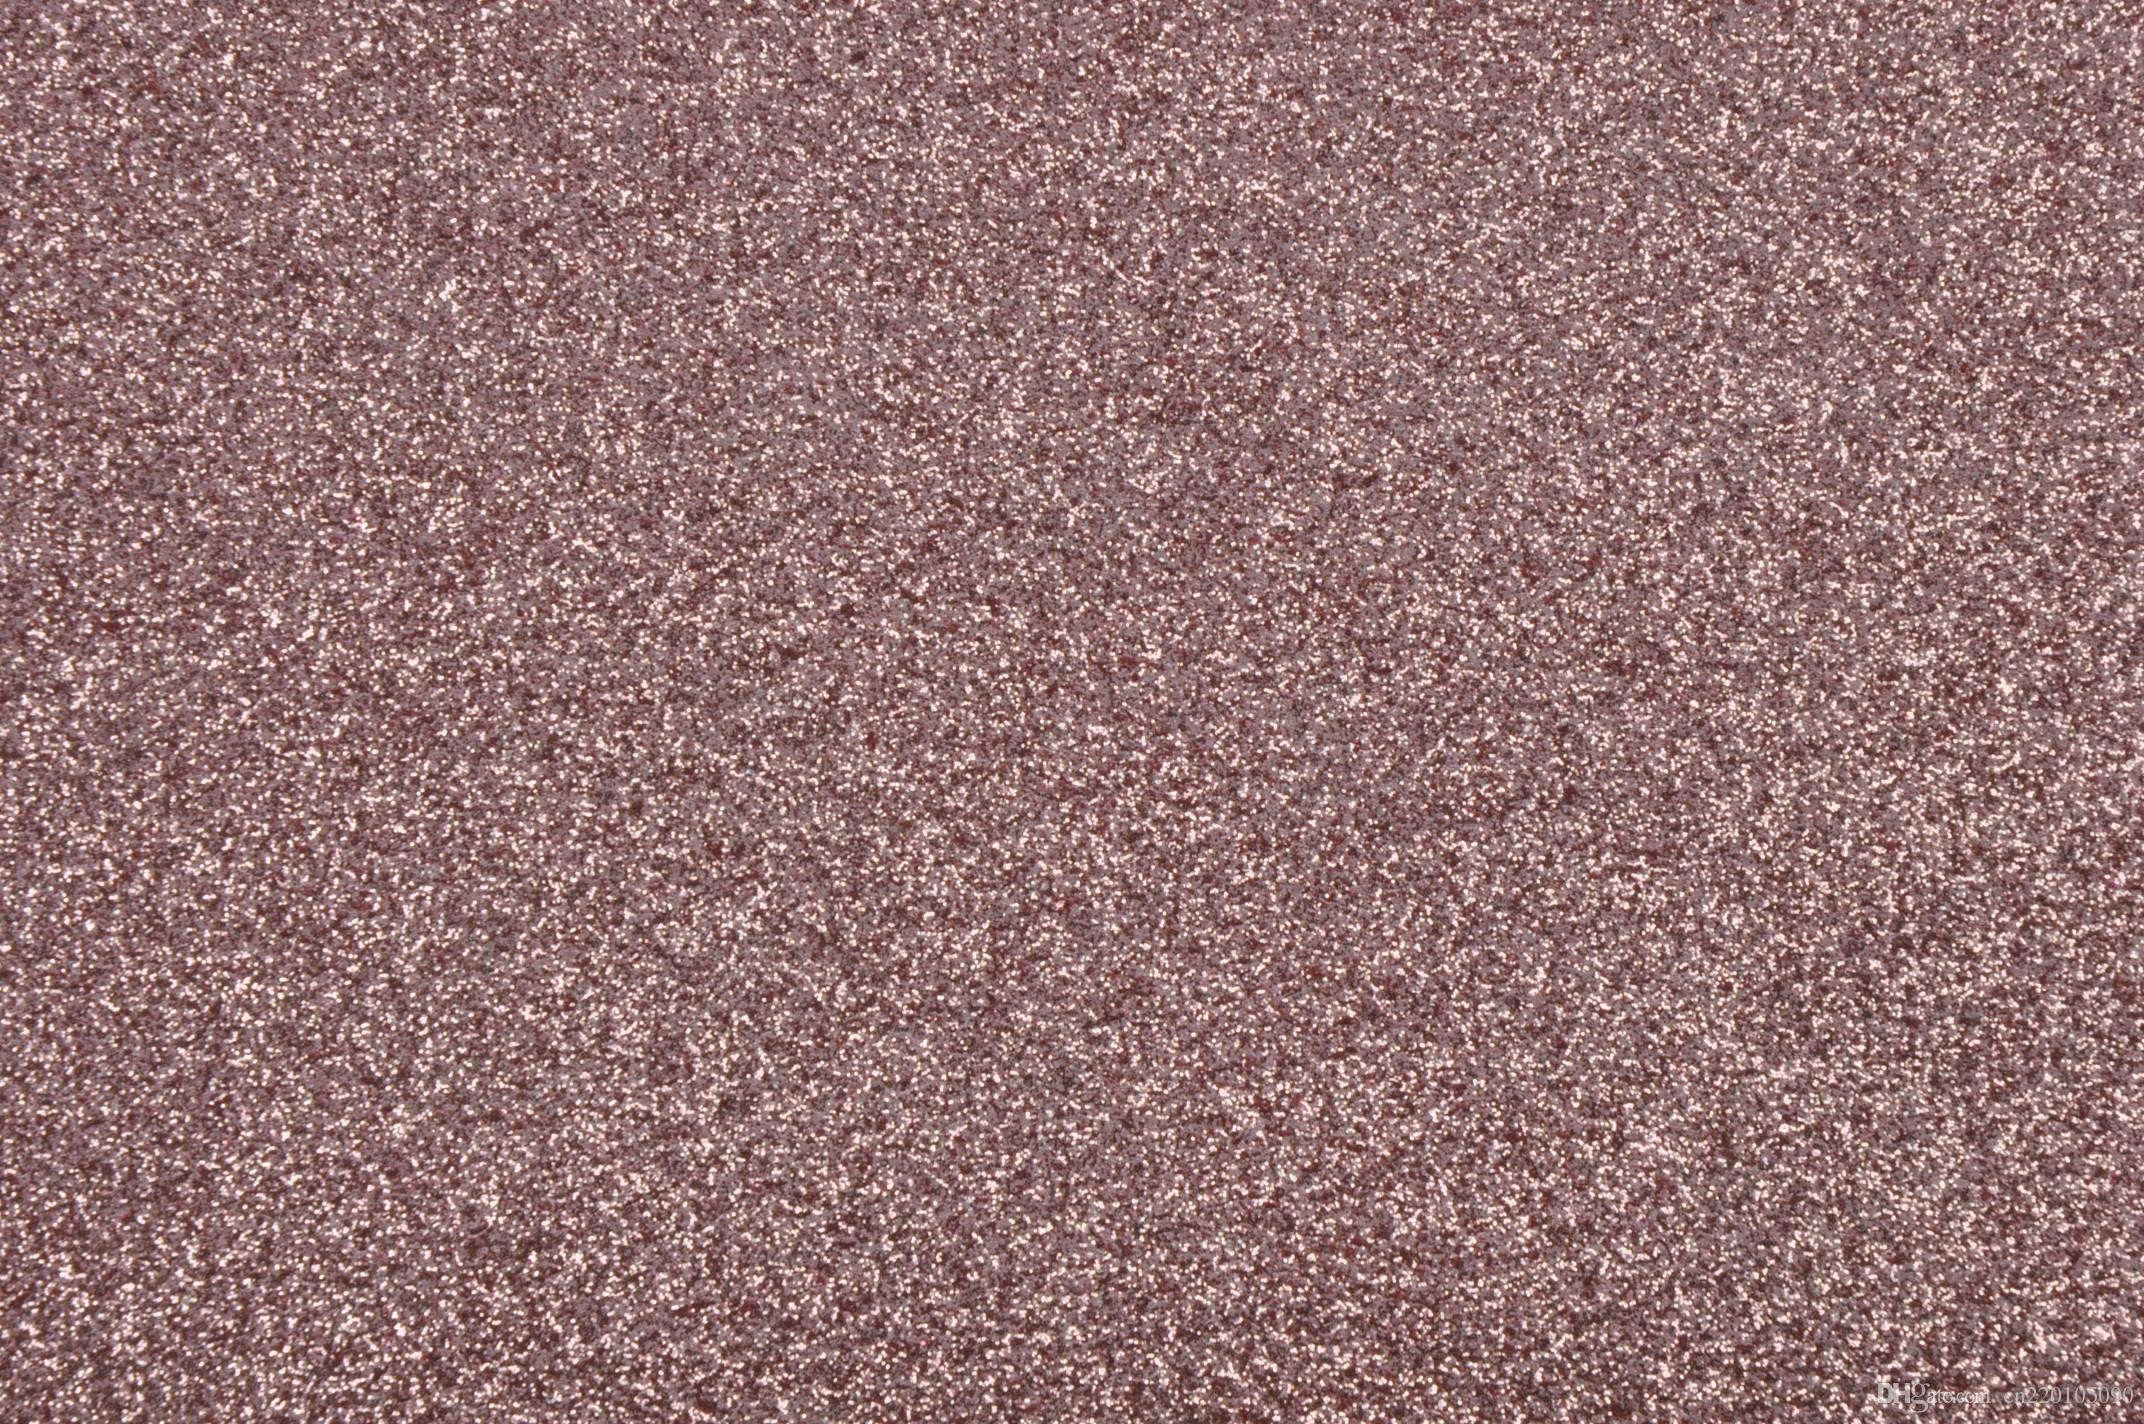 2144x1424 JC Pack eco-friendly red glitter wallpaper , champagne glitter fabric ,  vinyl glitter leather